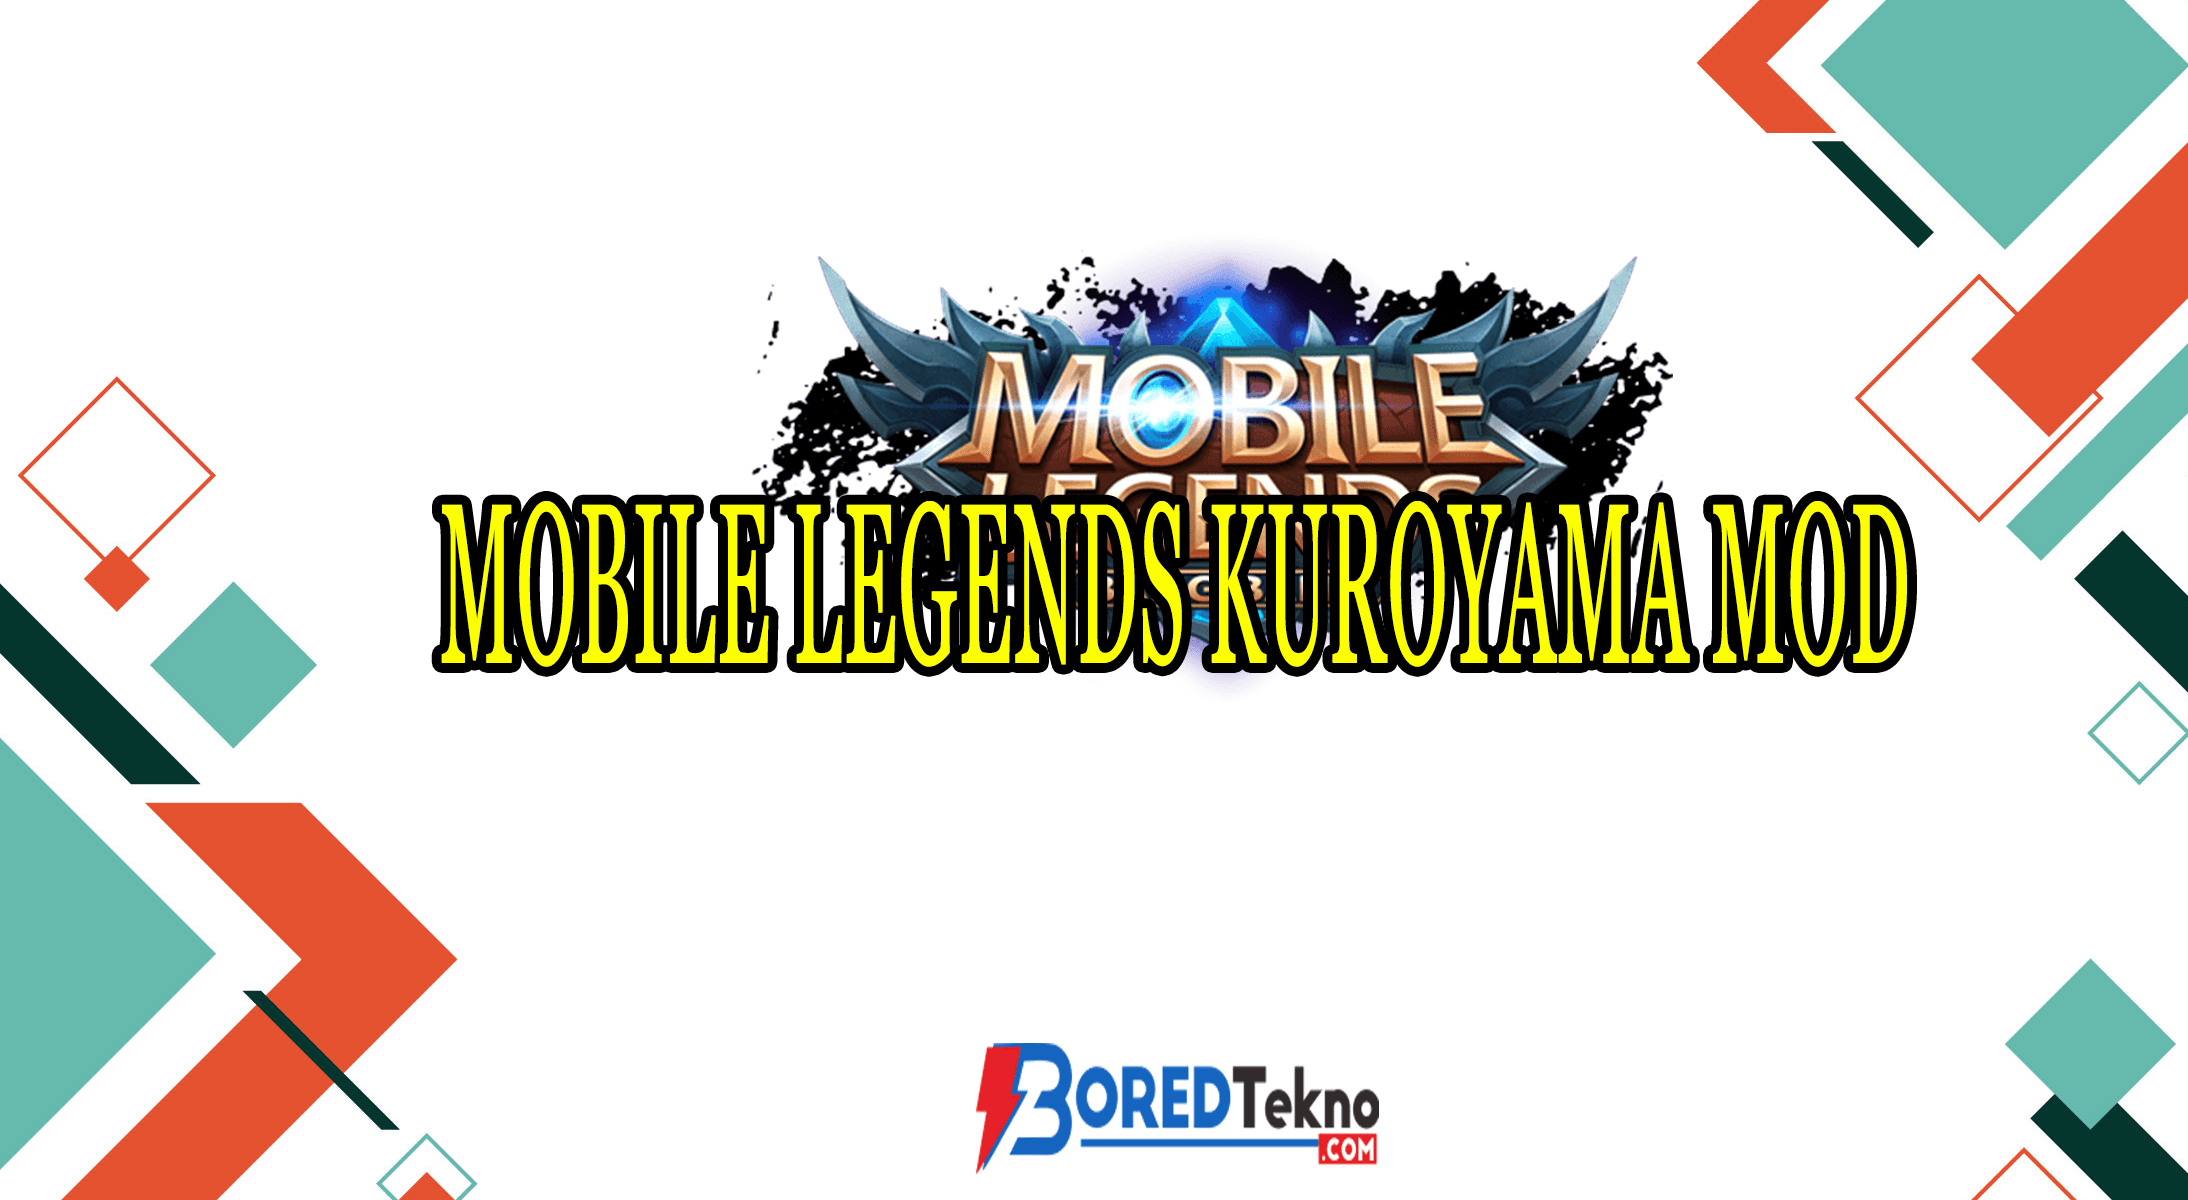 Download Mobile Legends Kuroyama Mod Gratis. Mobile Legends Kuroyama MOD Download Sekarang Juga